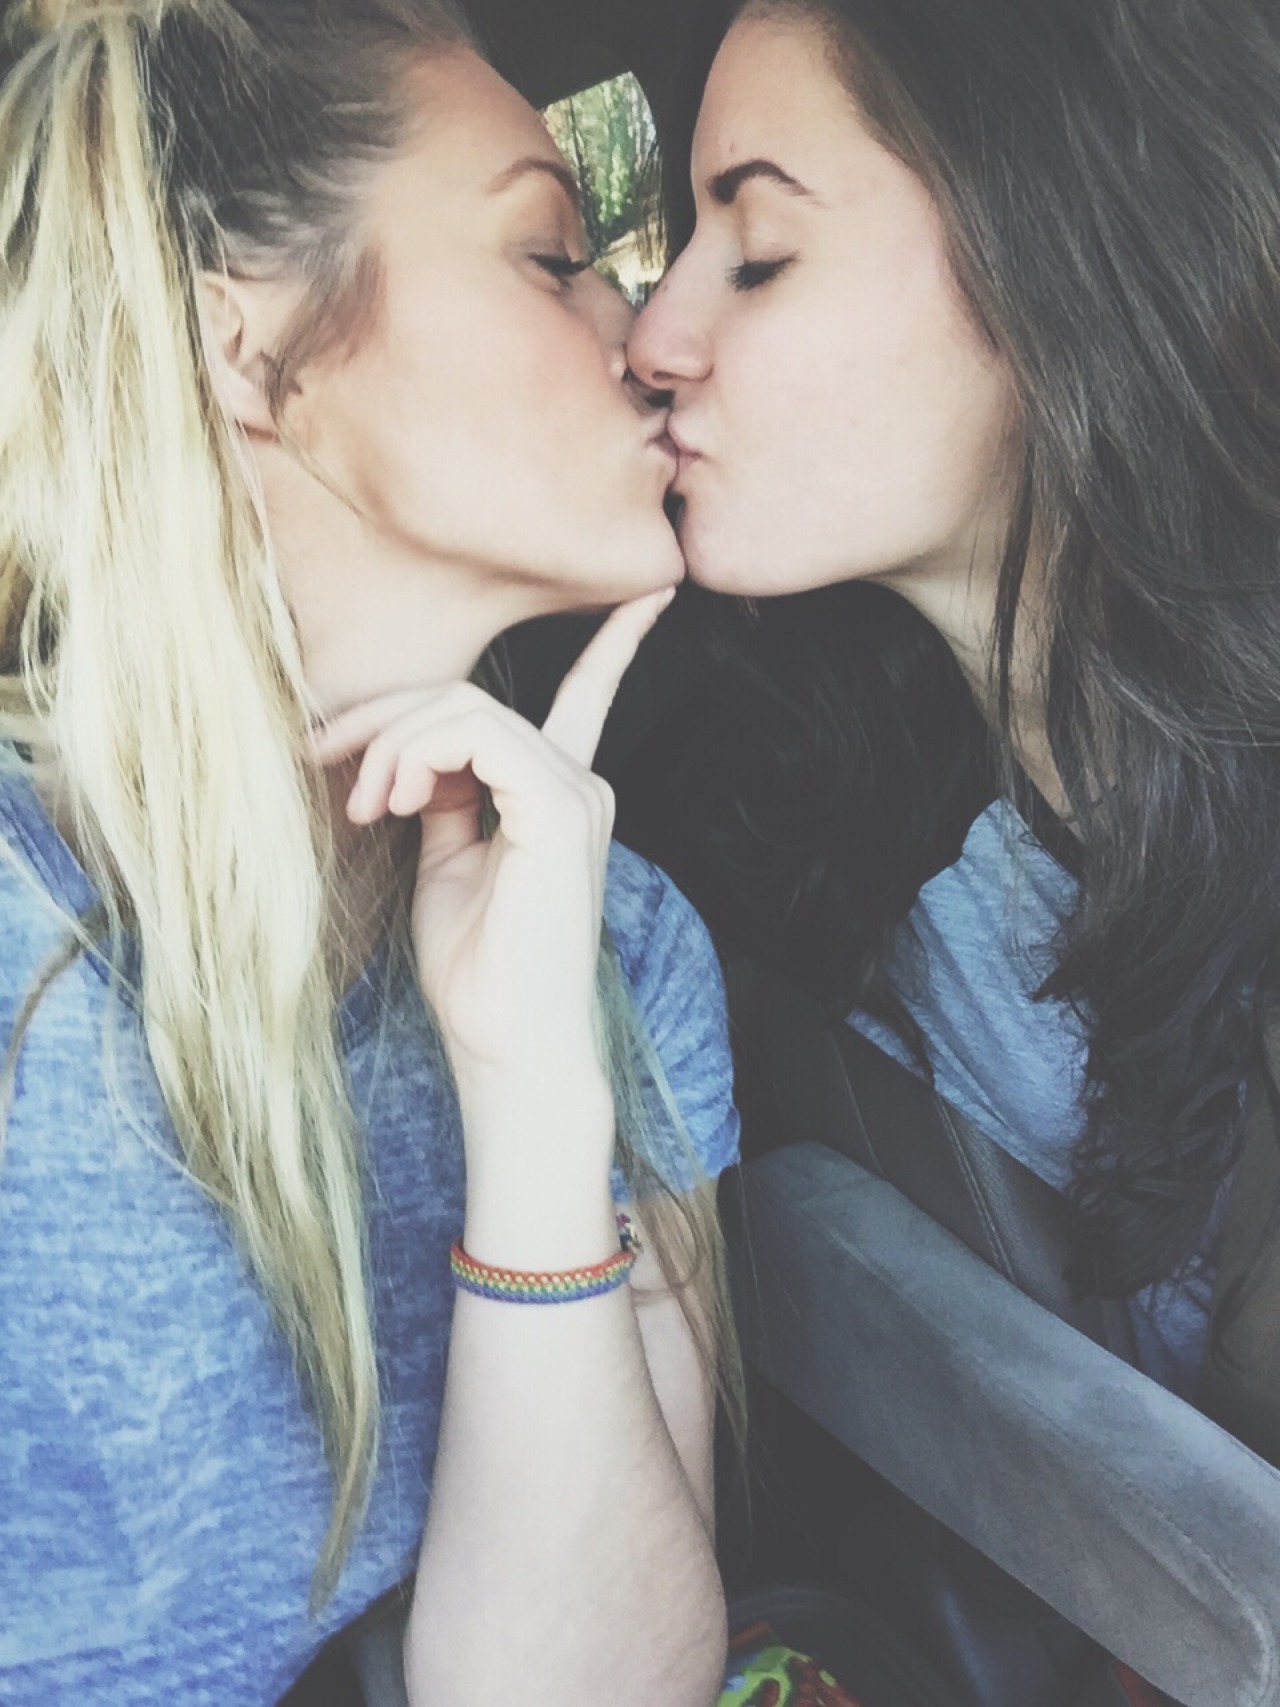 Включи как девушки сосутся. Поцелуй девушек. Девушки целуются. Девушка целует девушку. Две девушки целуются.